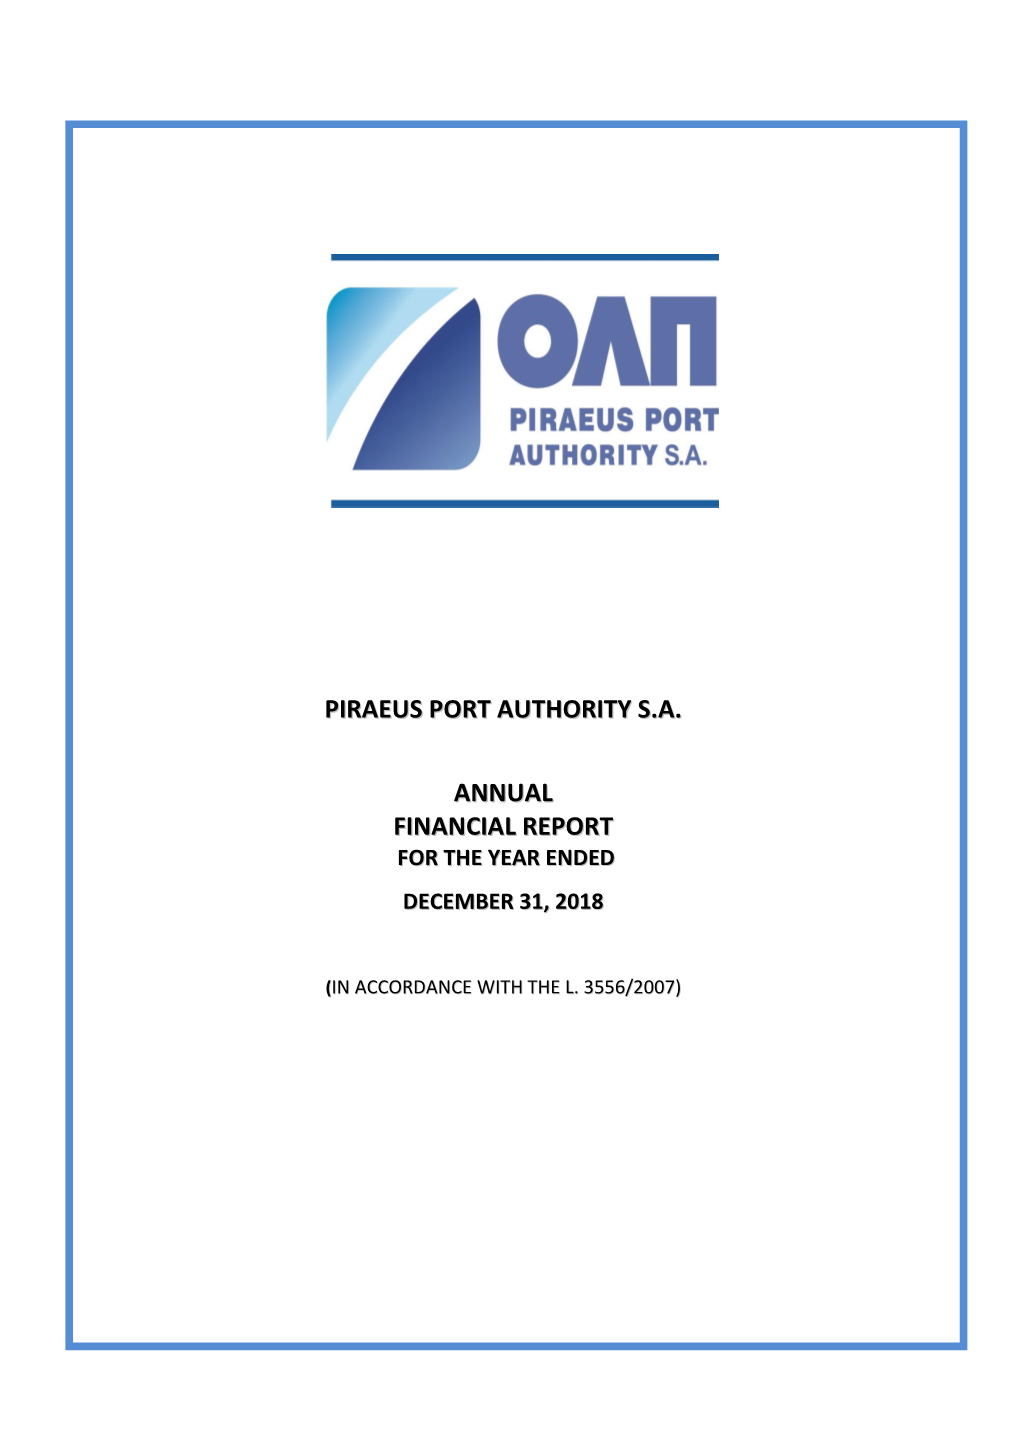 Piraeus Port Authority S.A. Annual Financial Report